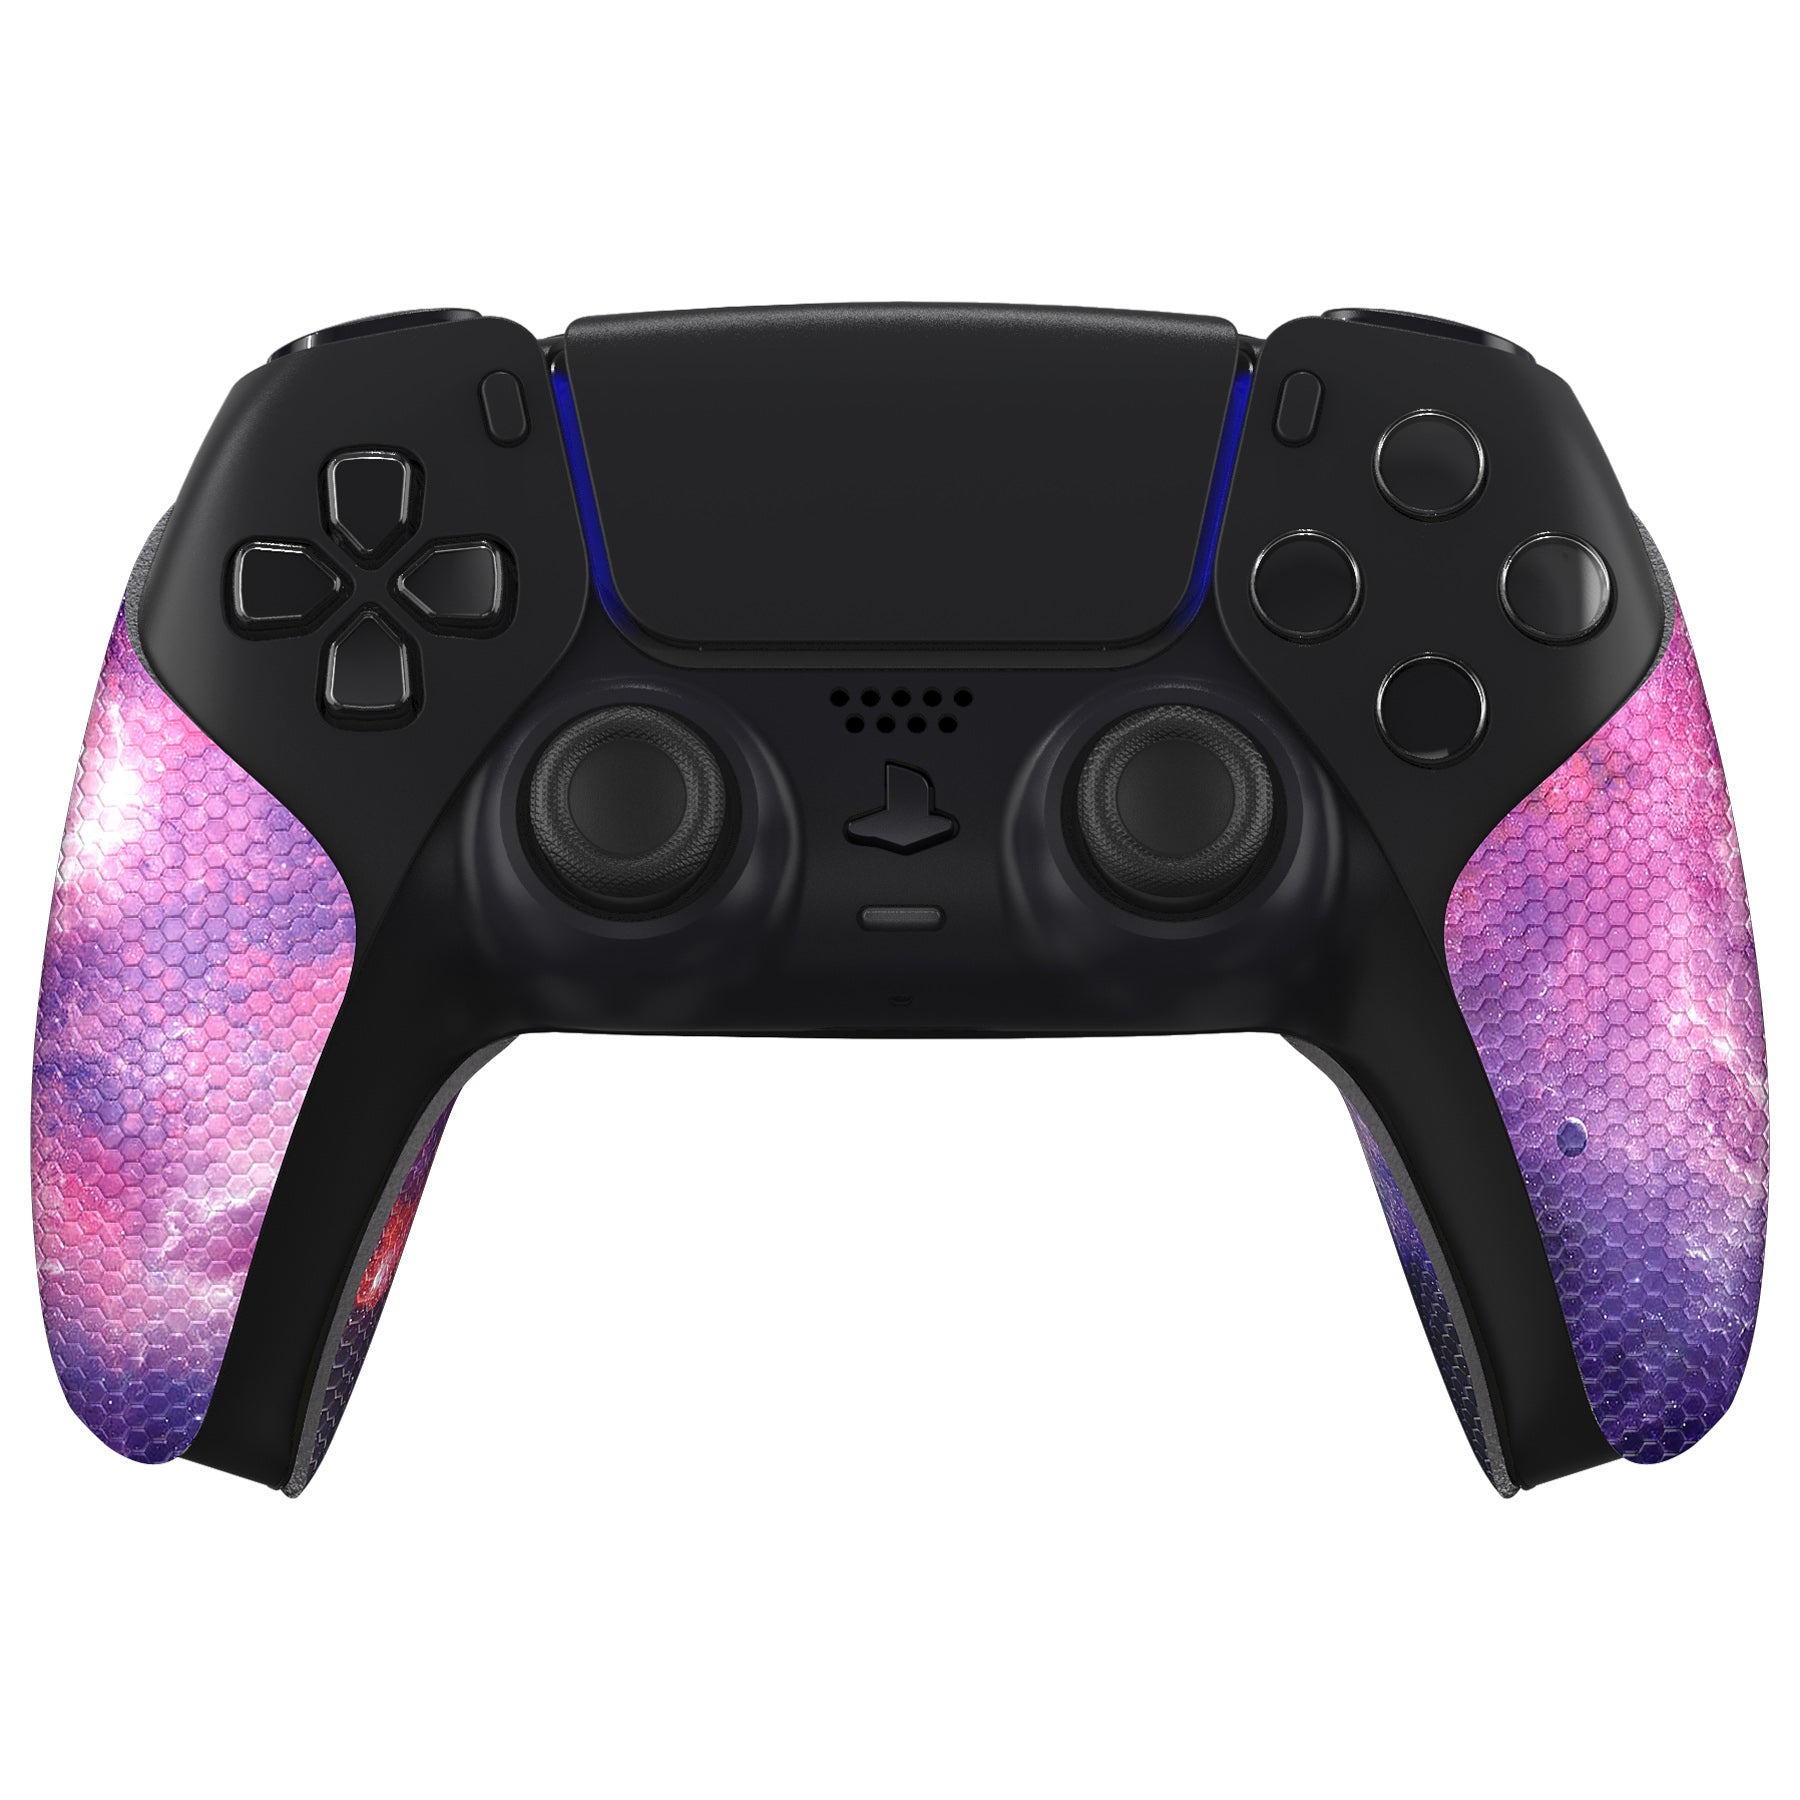 PlayVital Nebula Galaxy Anti-Skid Sweat-Absorbent Controller Grip for PS5 Controller - PFPJ127 PlayVital